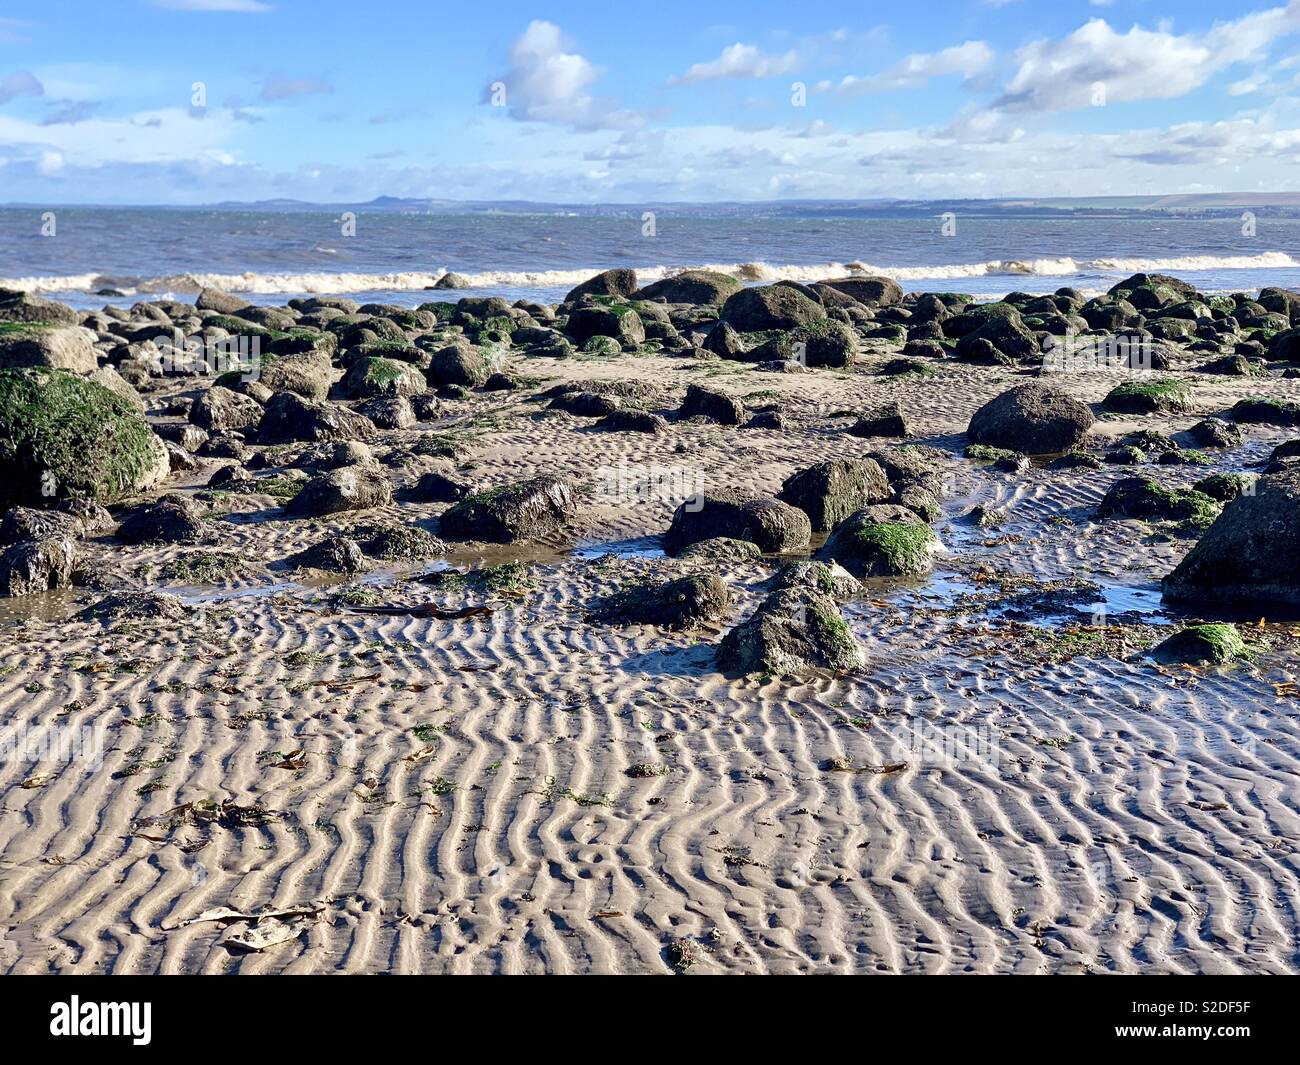 Receding tide exposes rocks on a beach in Edinburgh Stock Photo